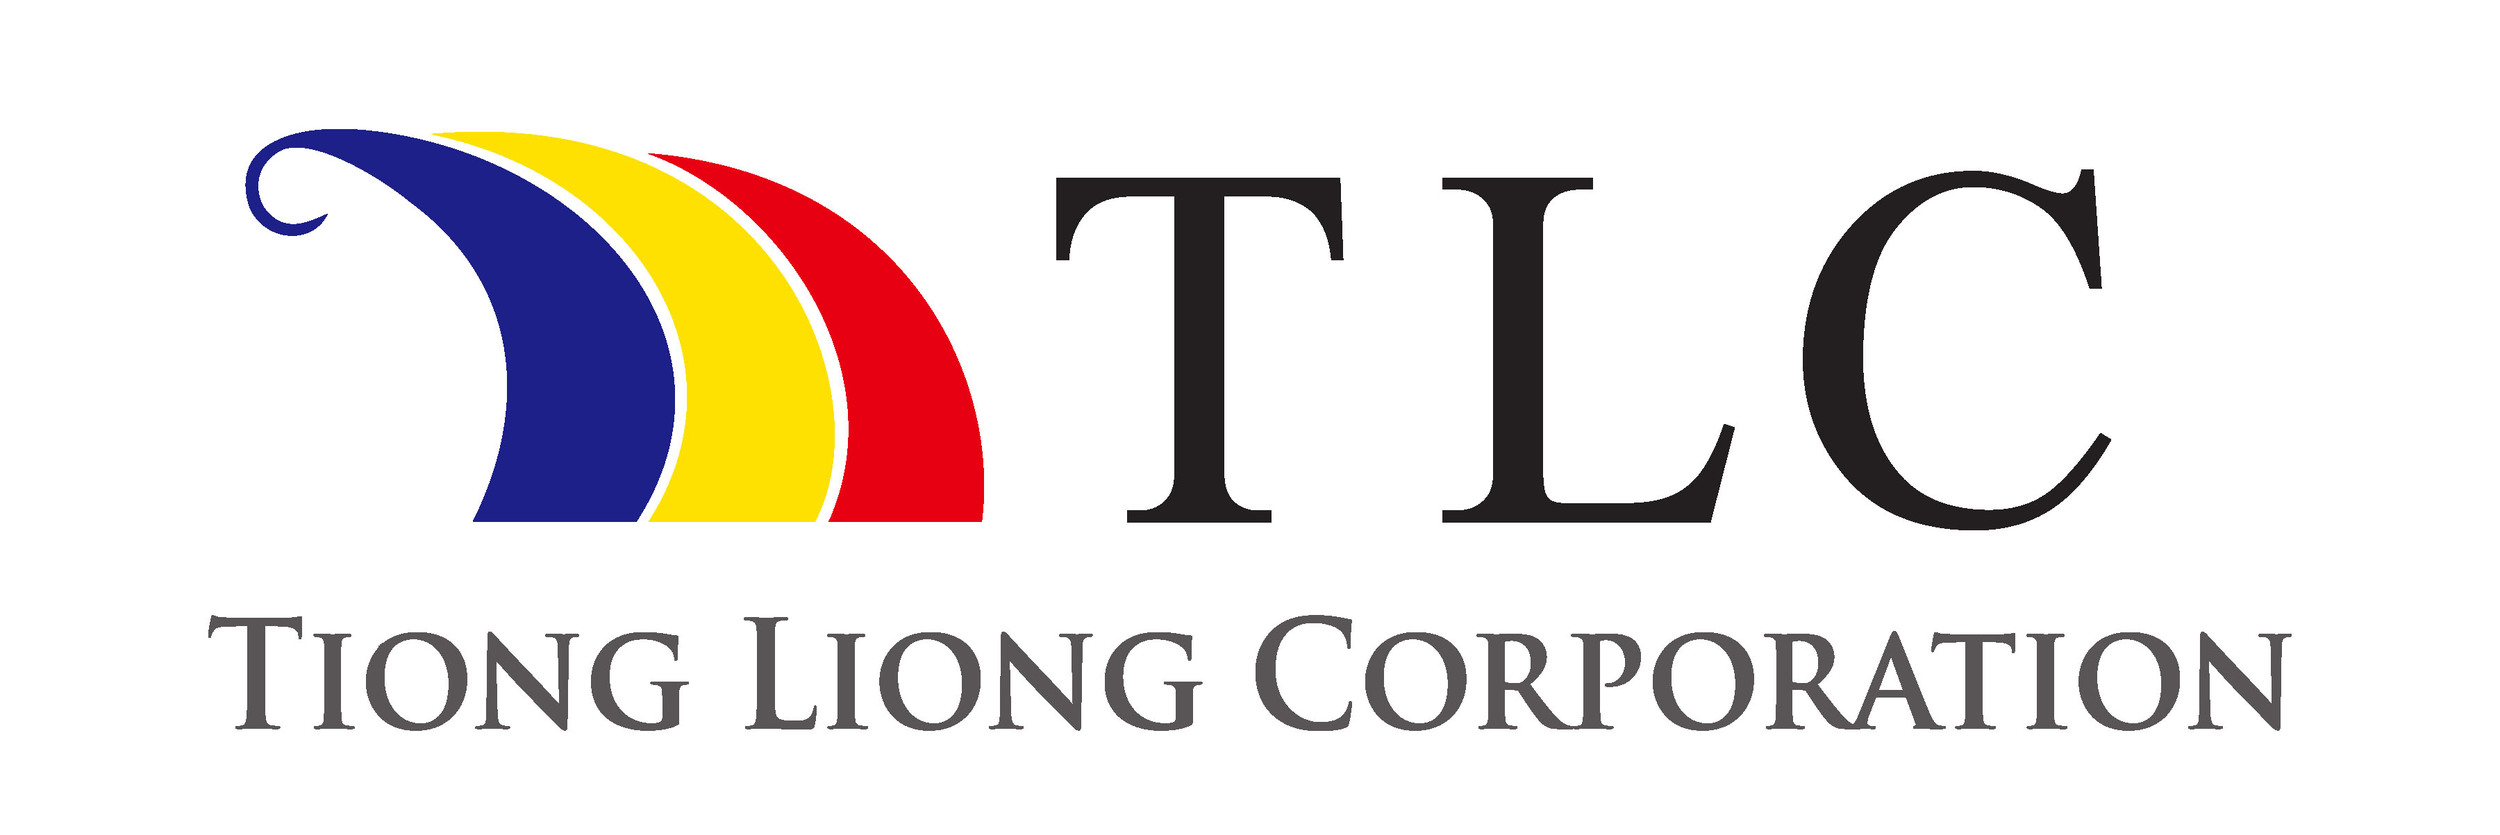 NewTLC logo_Colored.jpg